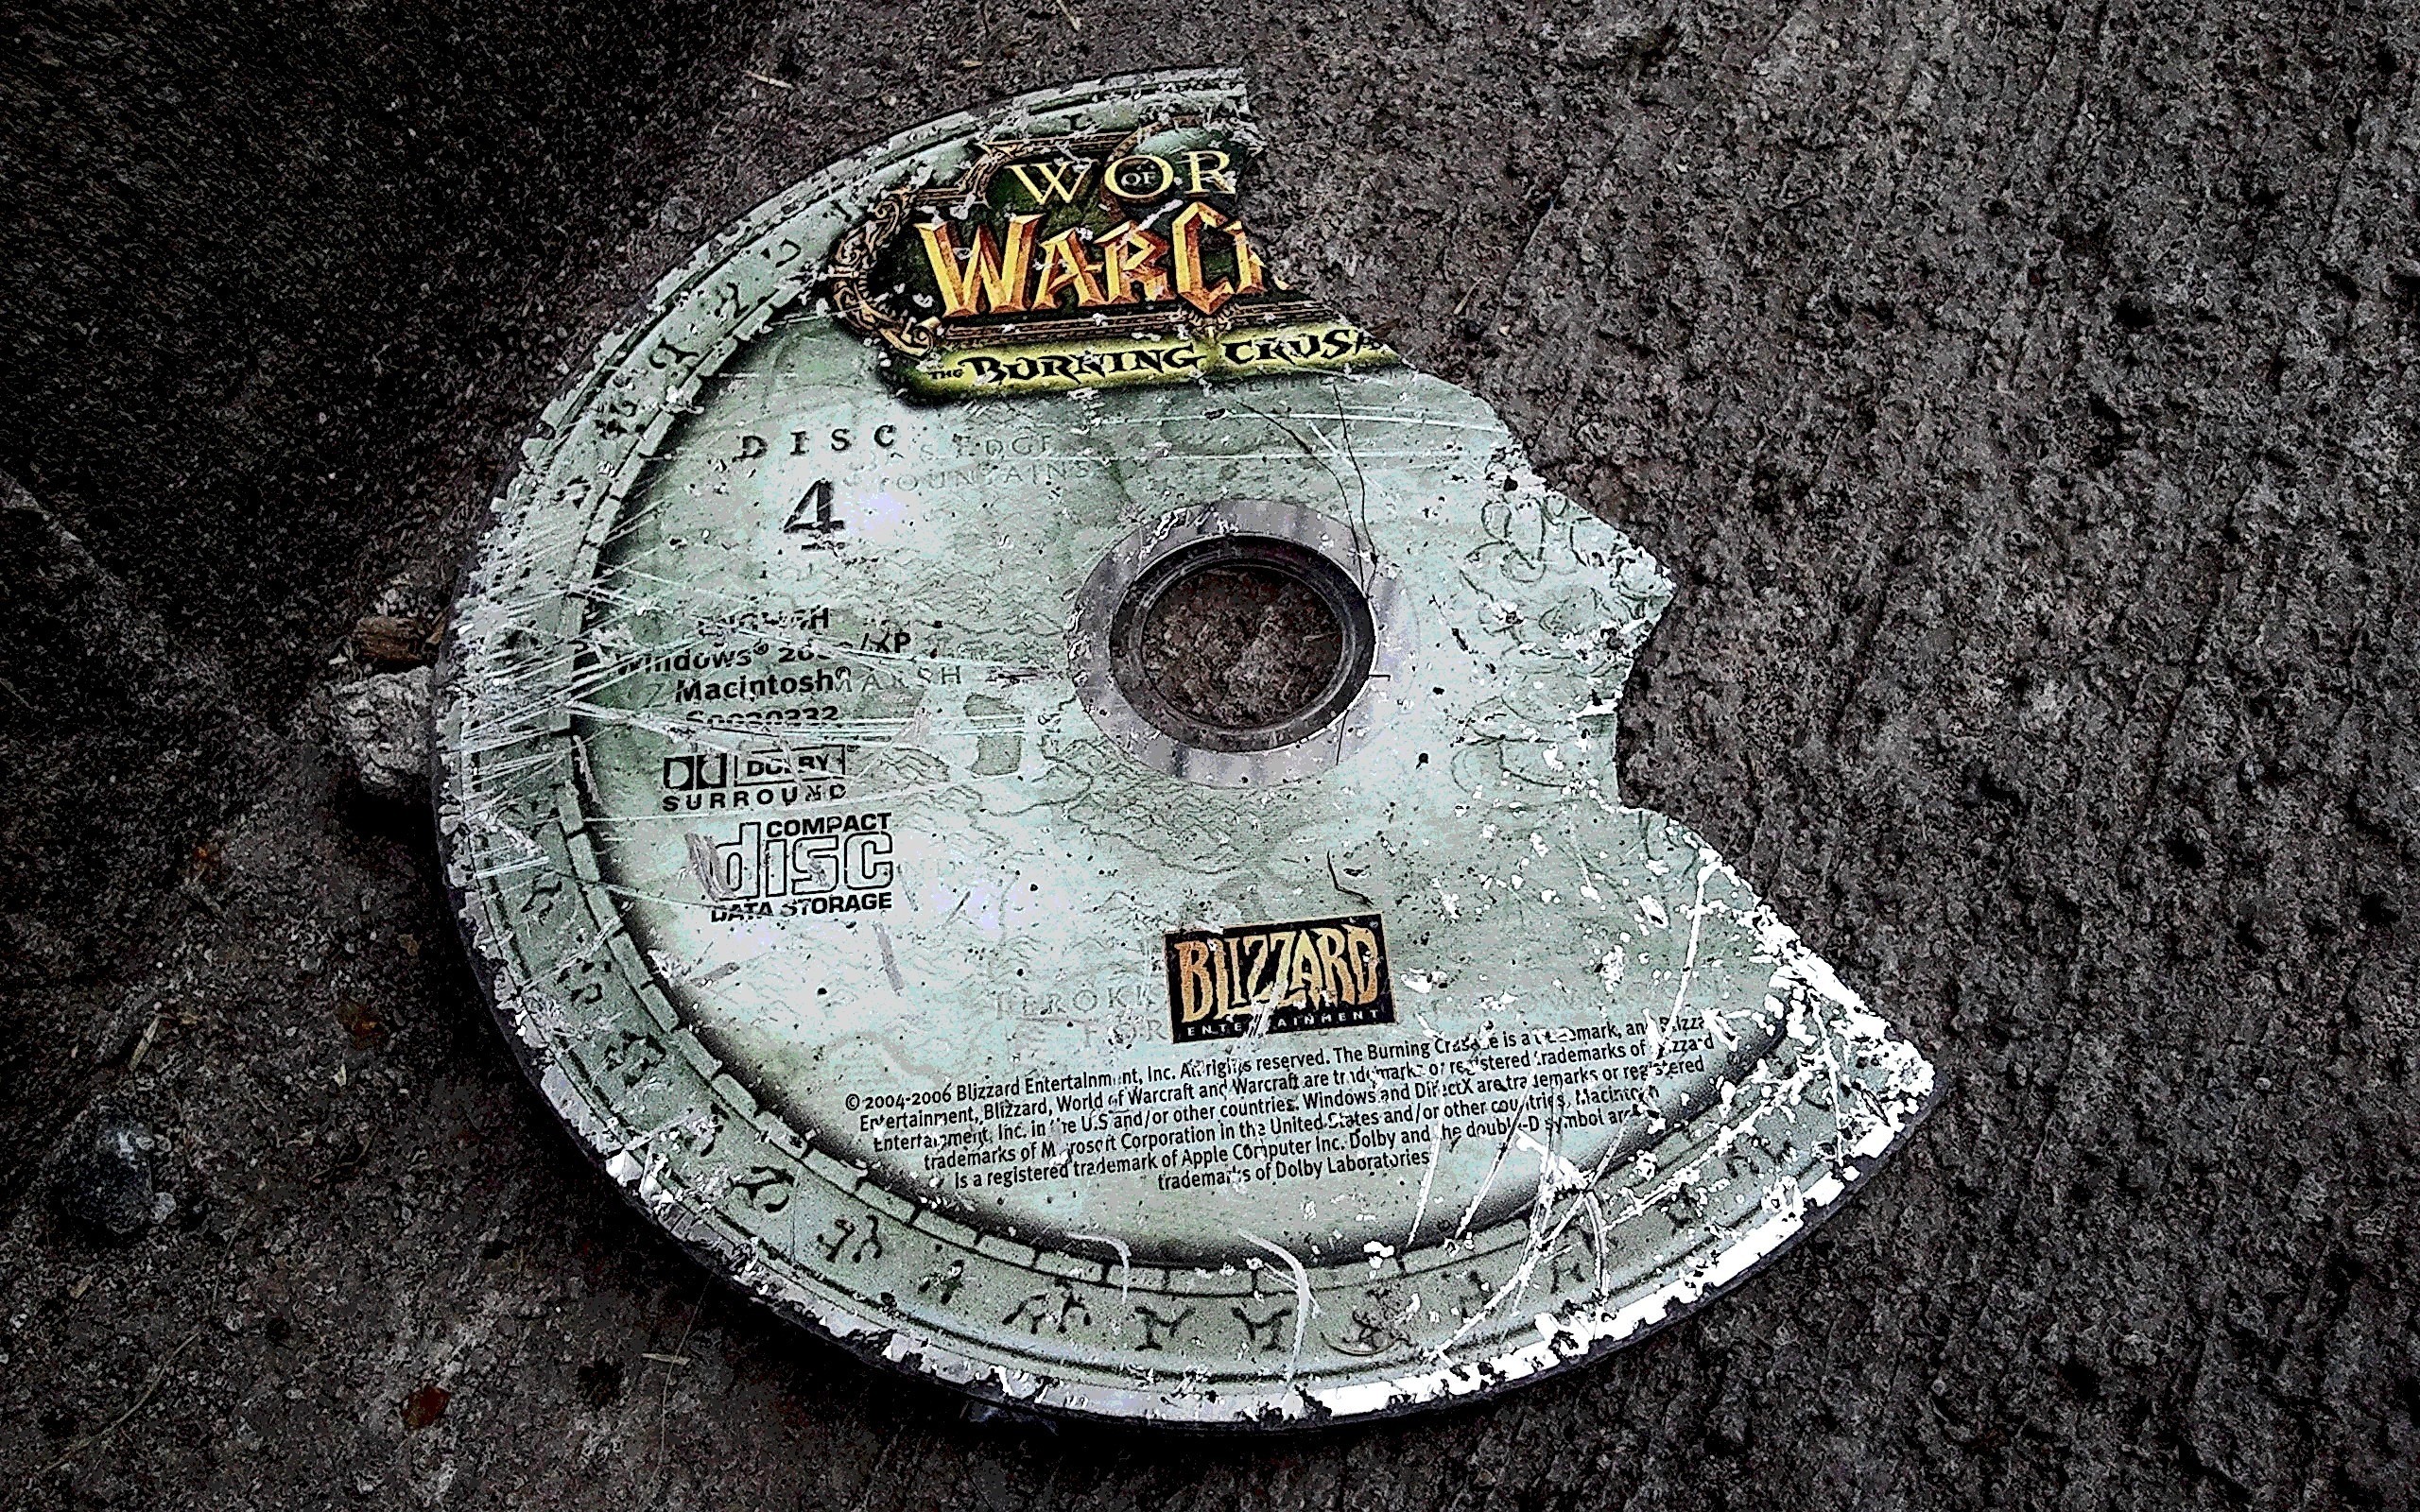 World of Warcraft, broken, compact disc - desktop wallpaper